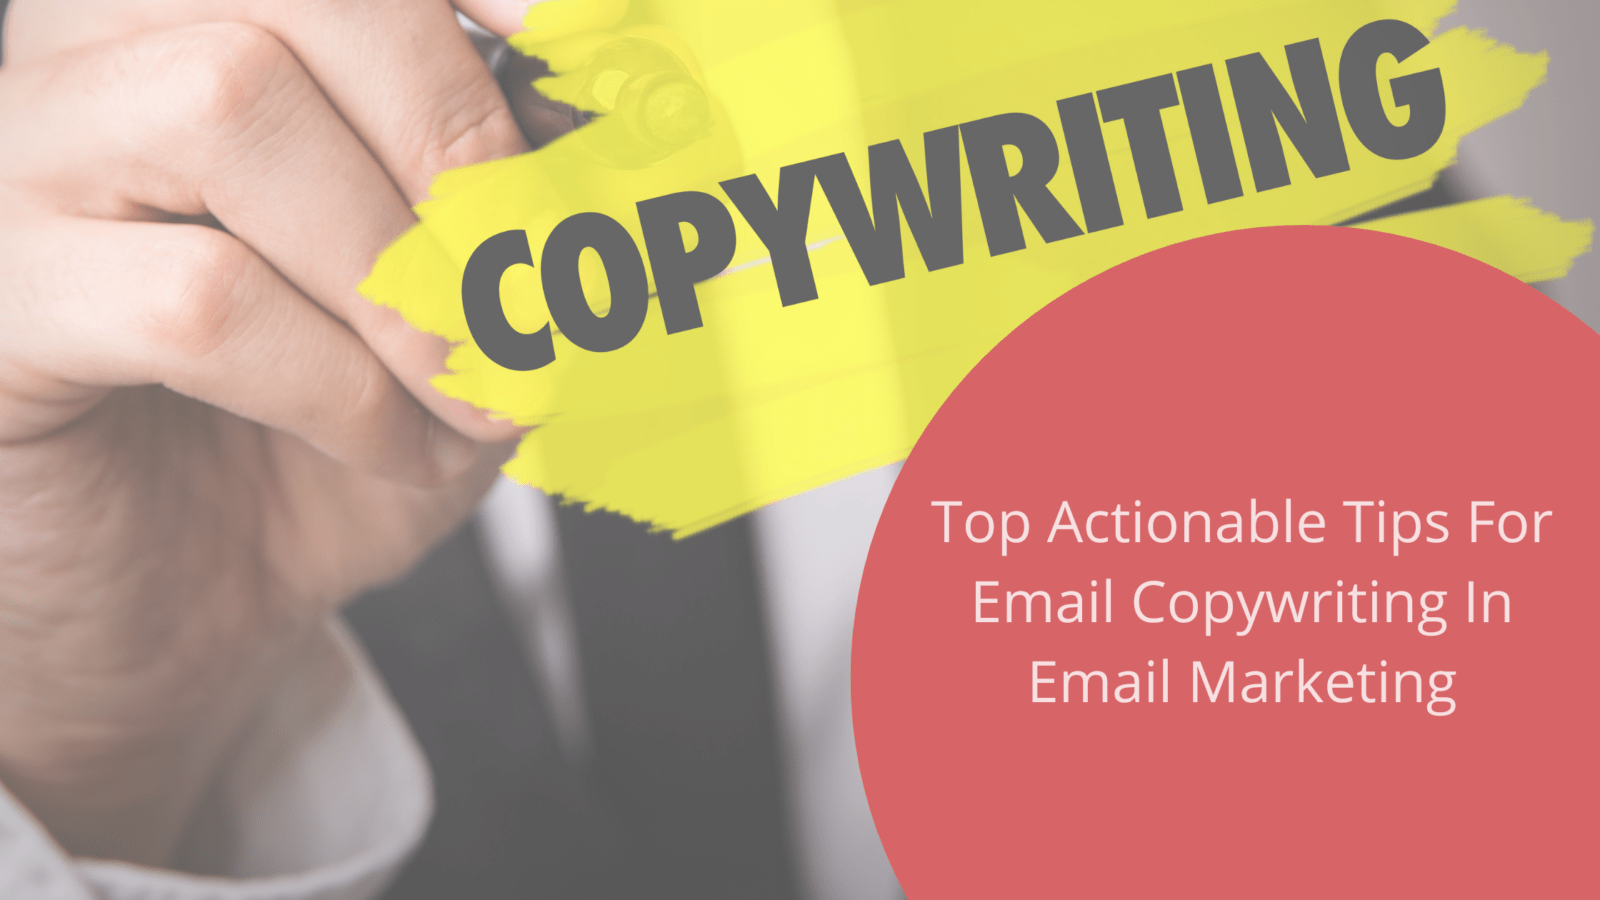 Email copywriting